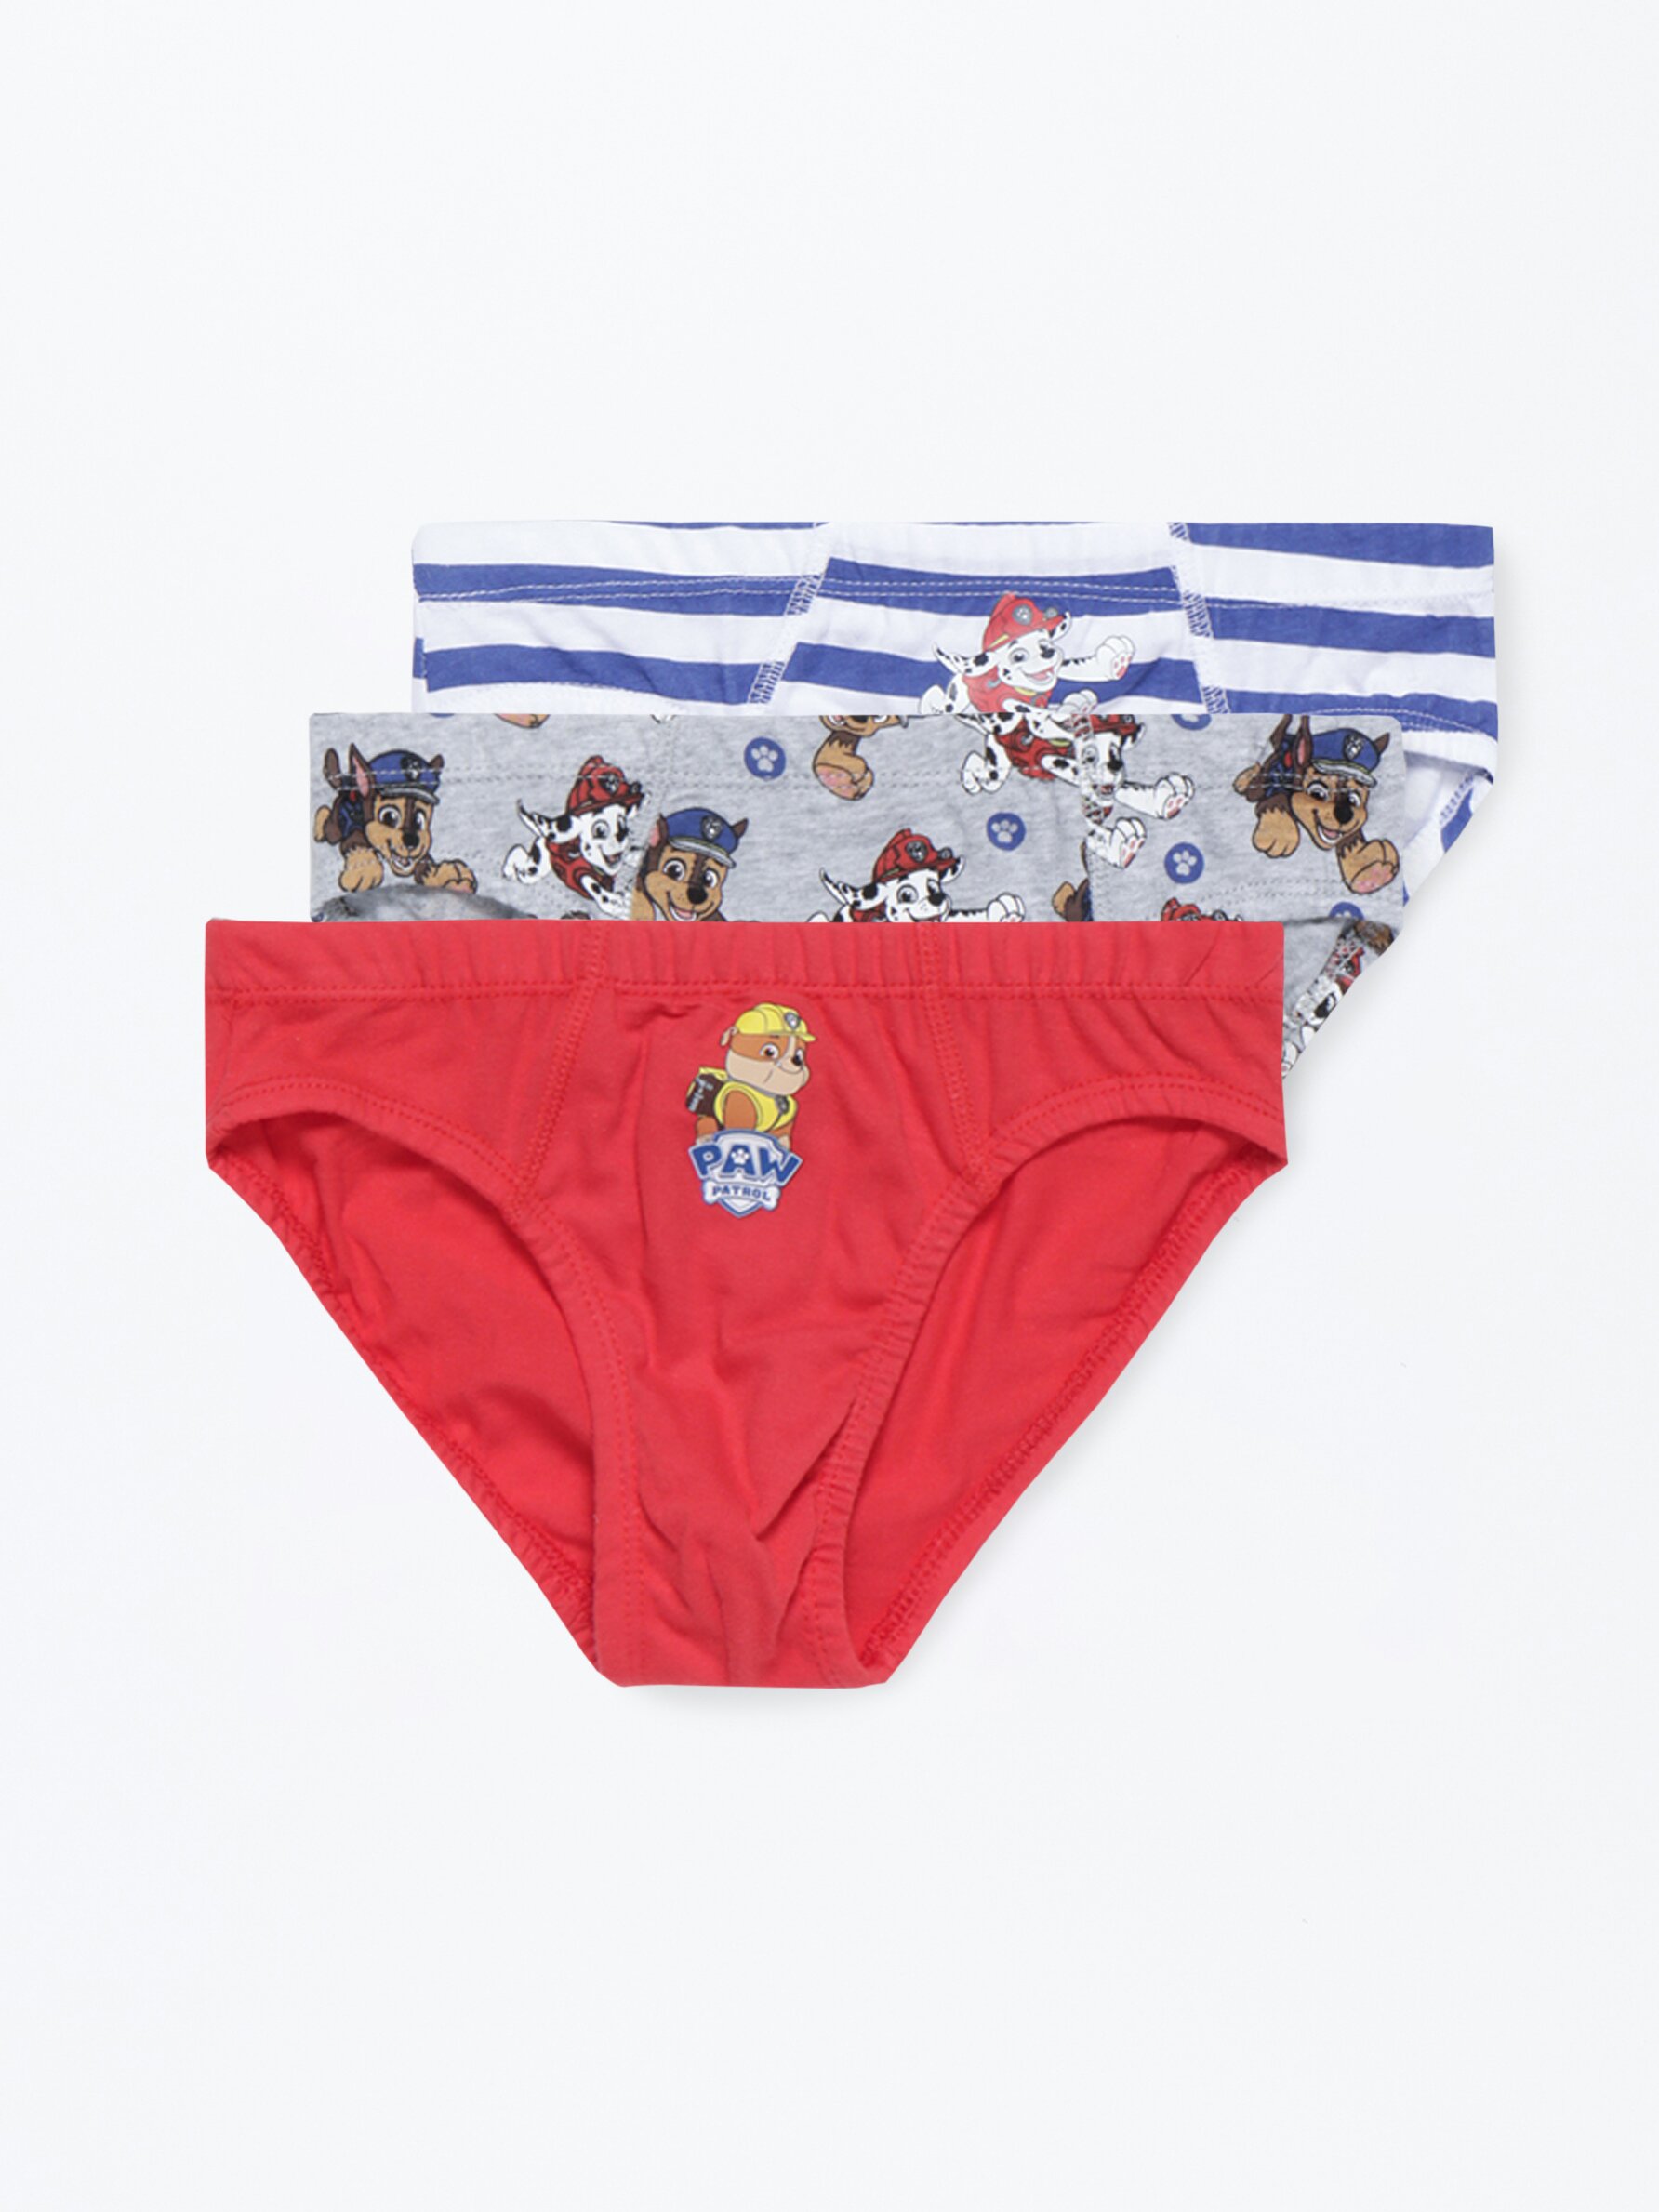 Paw Patrol Toddler Boys Underwear 3 Pack